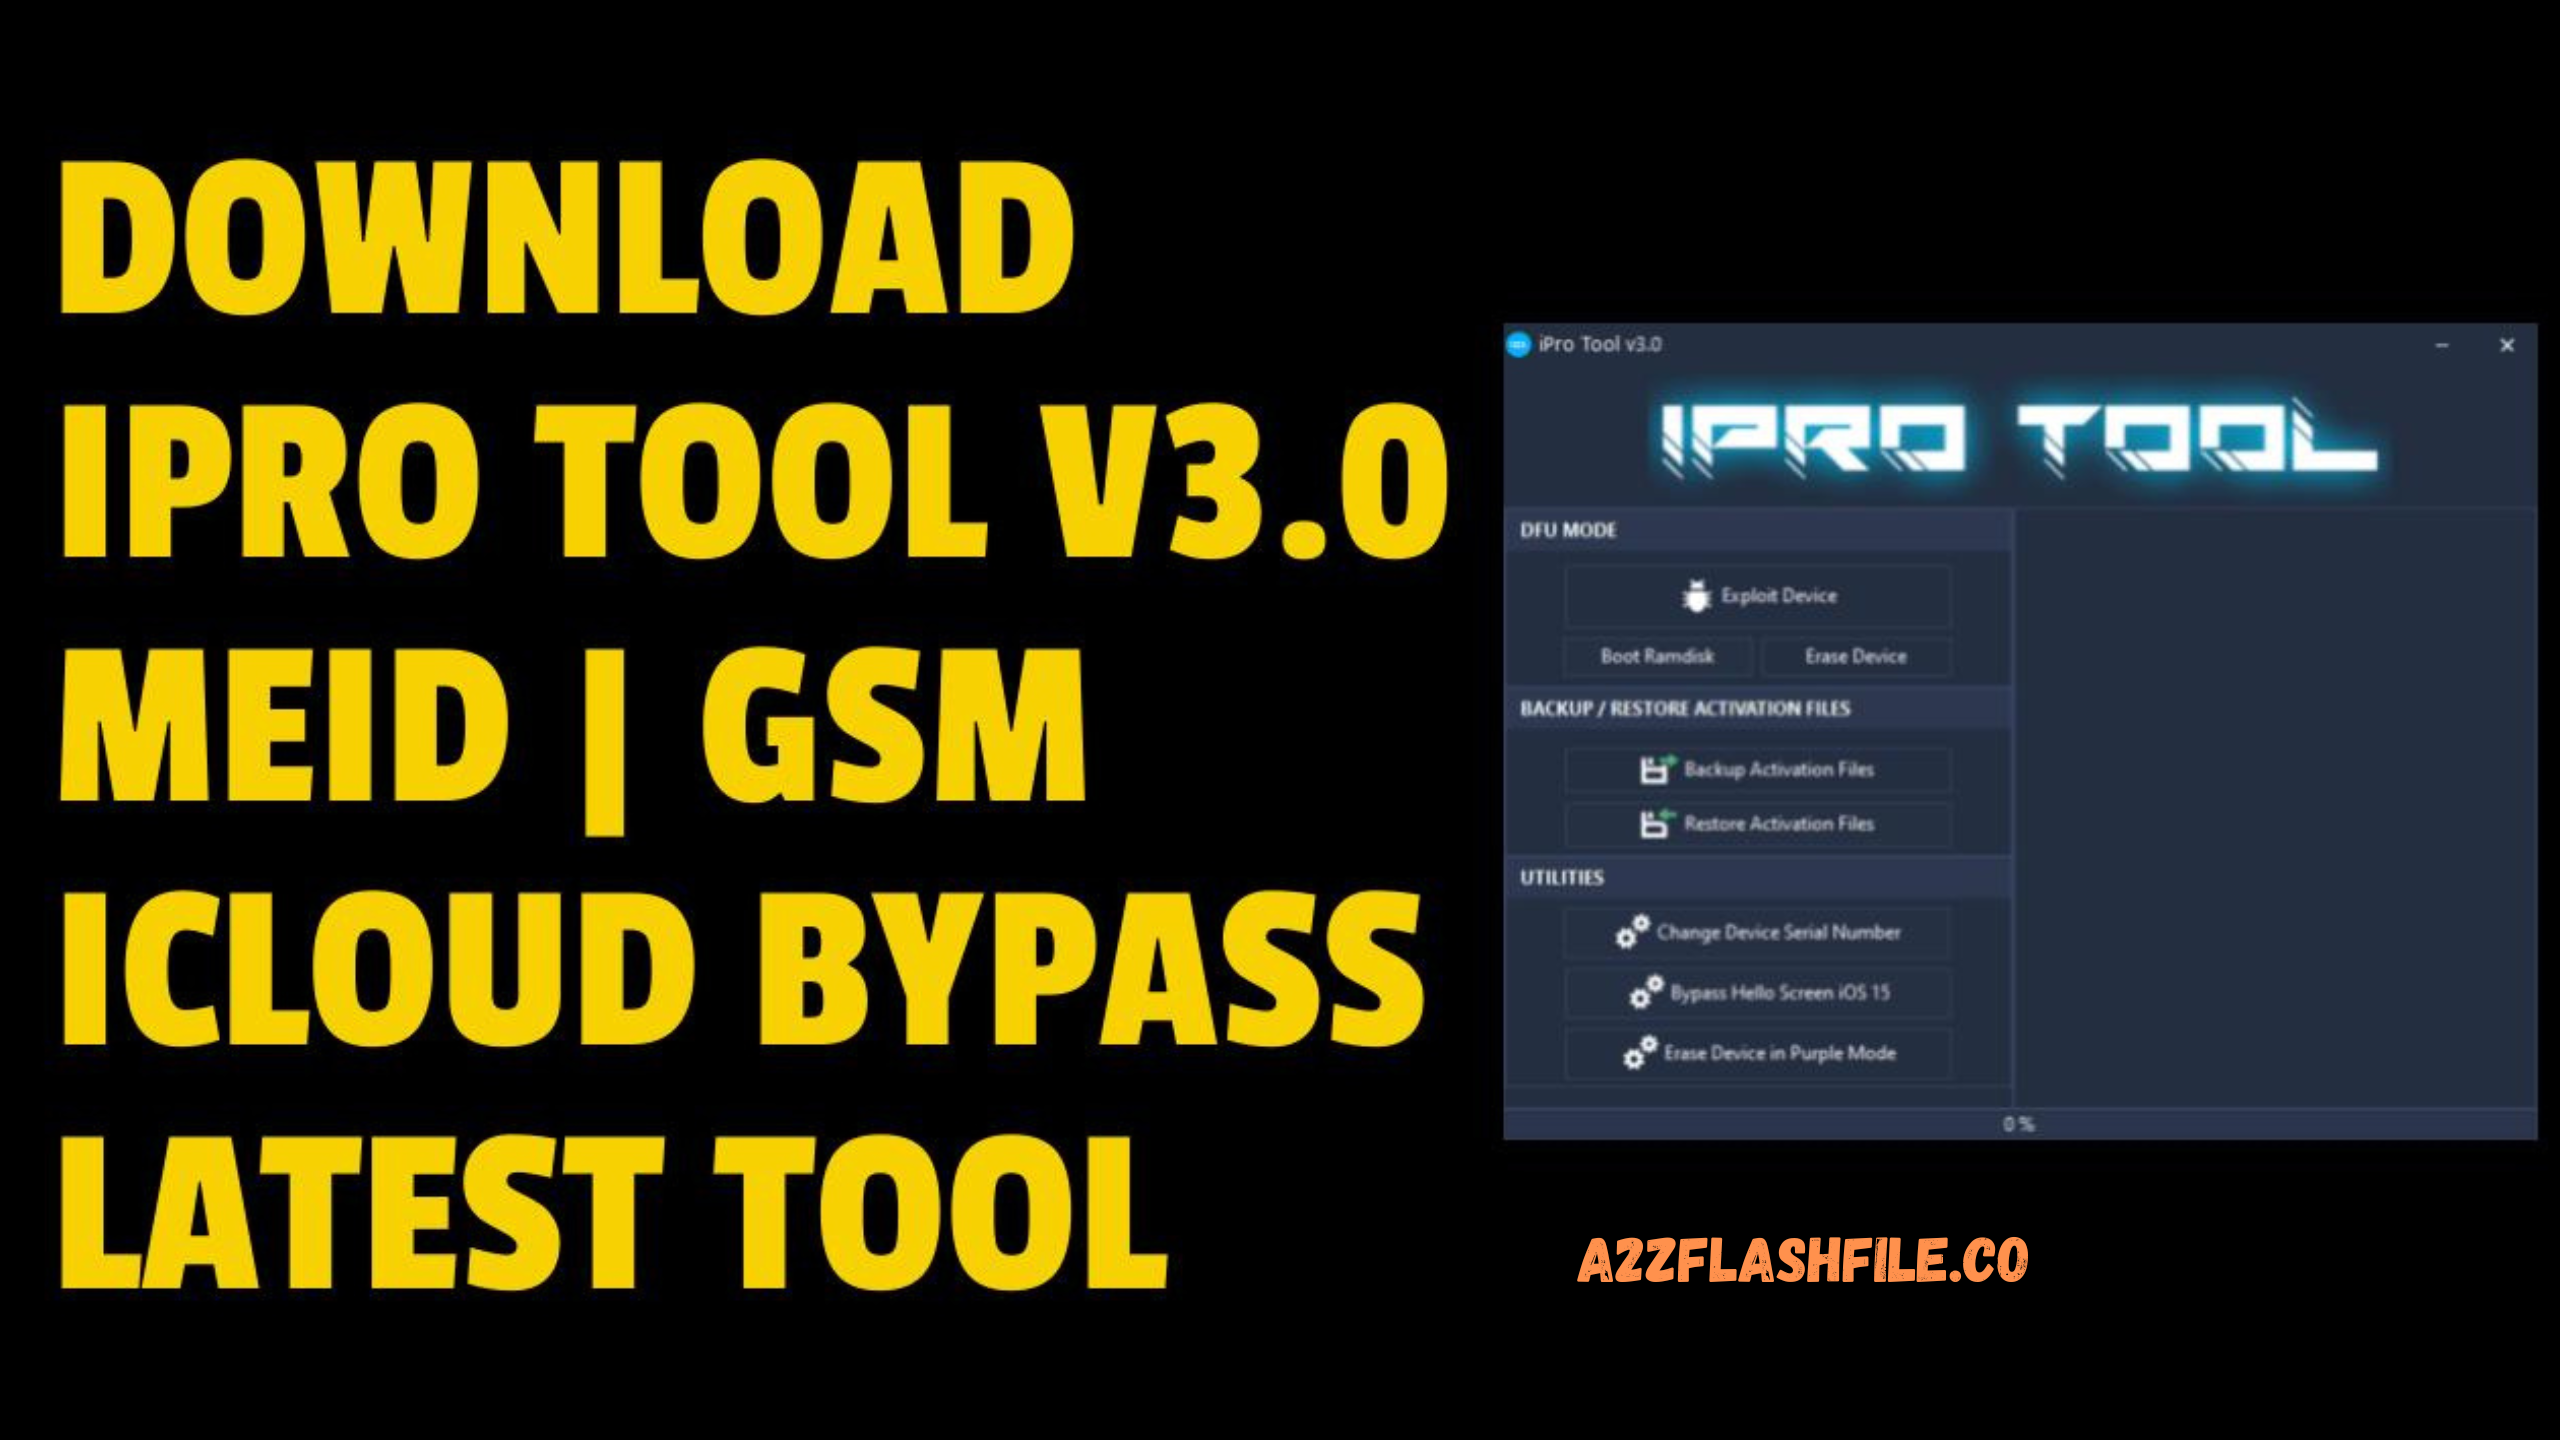 iPRO Tool V3.0 ICloud Bypass Latest Windows Tool Free